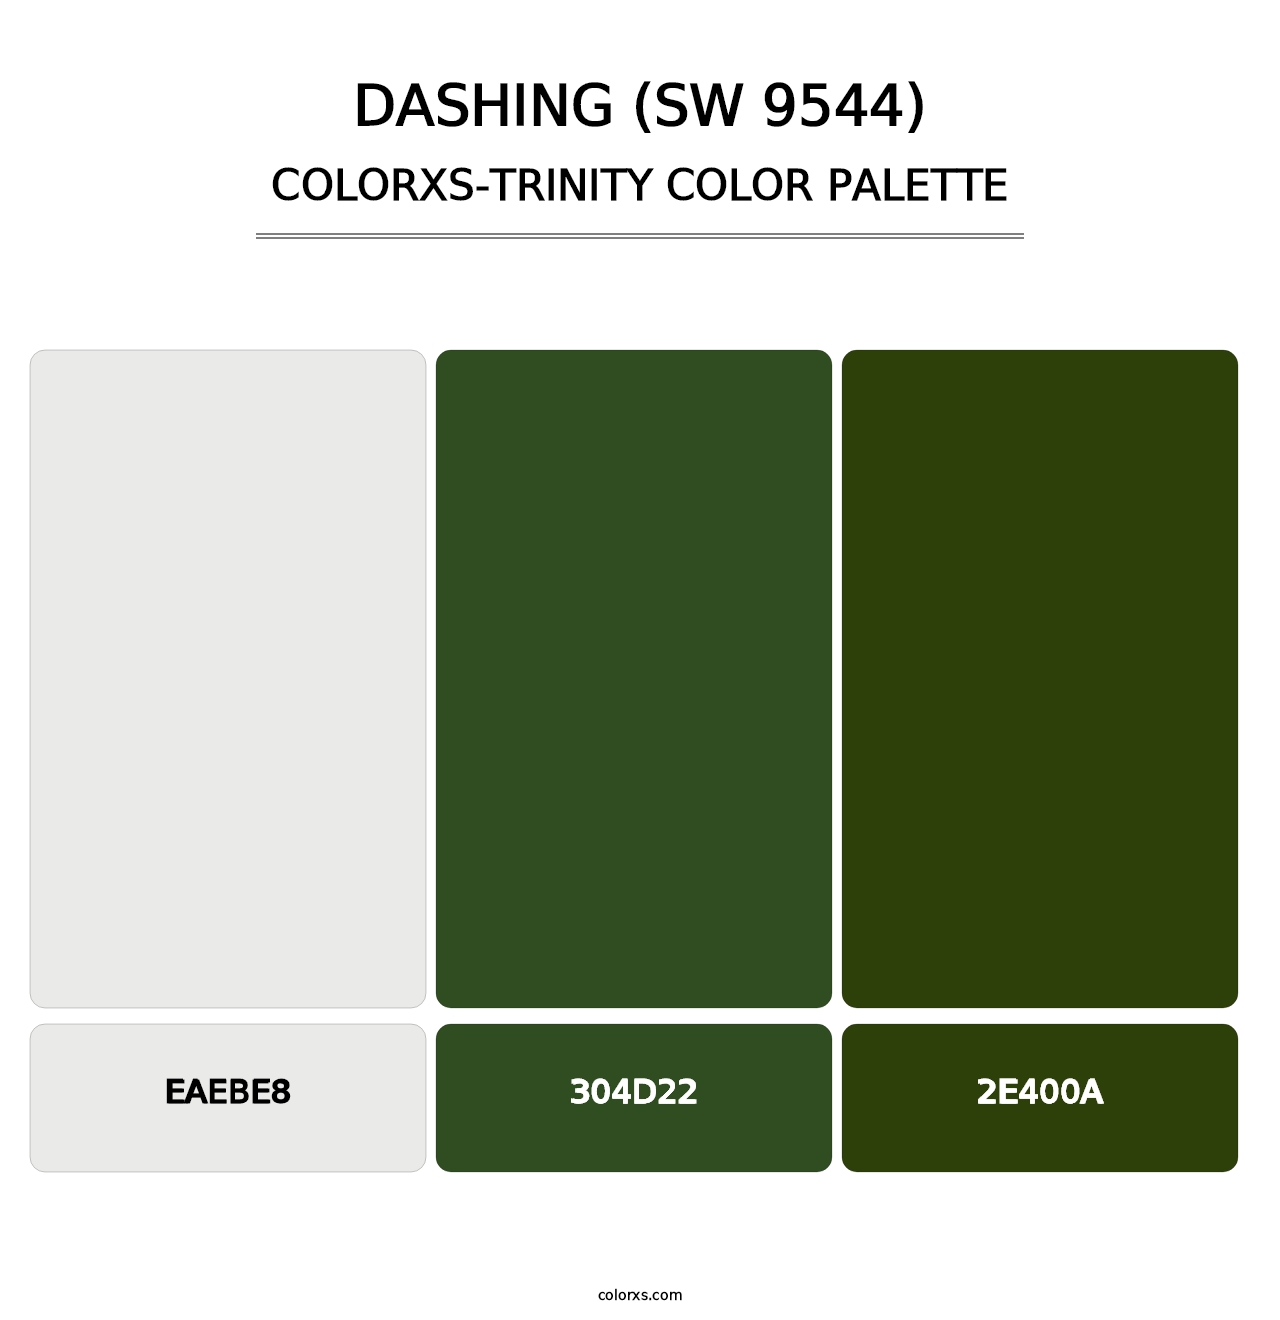 Dashing (SW 9544) - Colorxs Trinity Palette